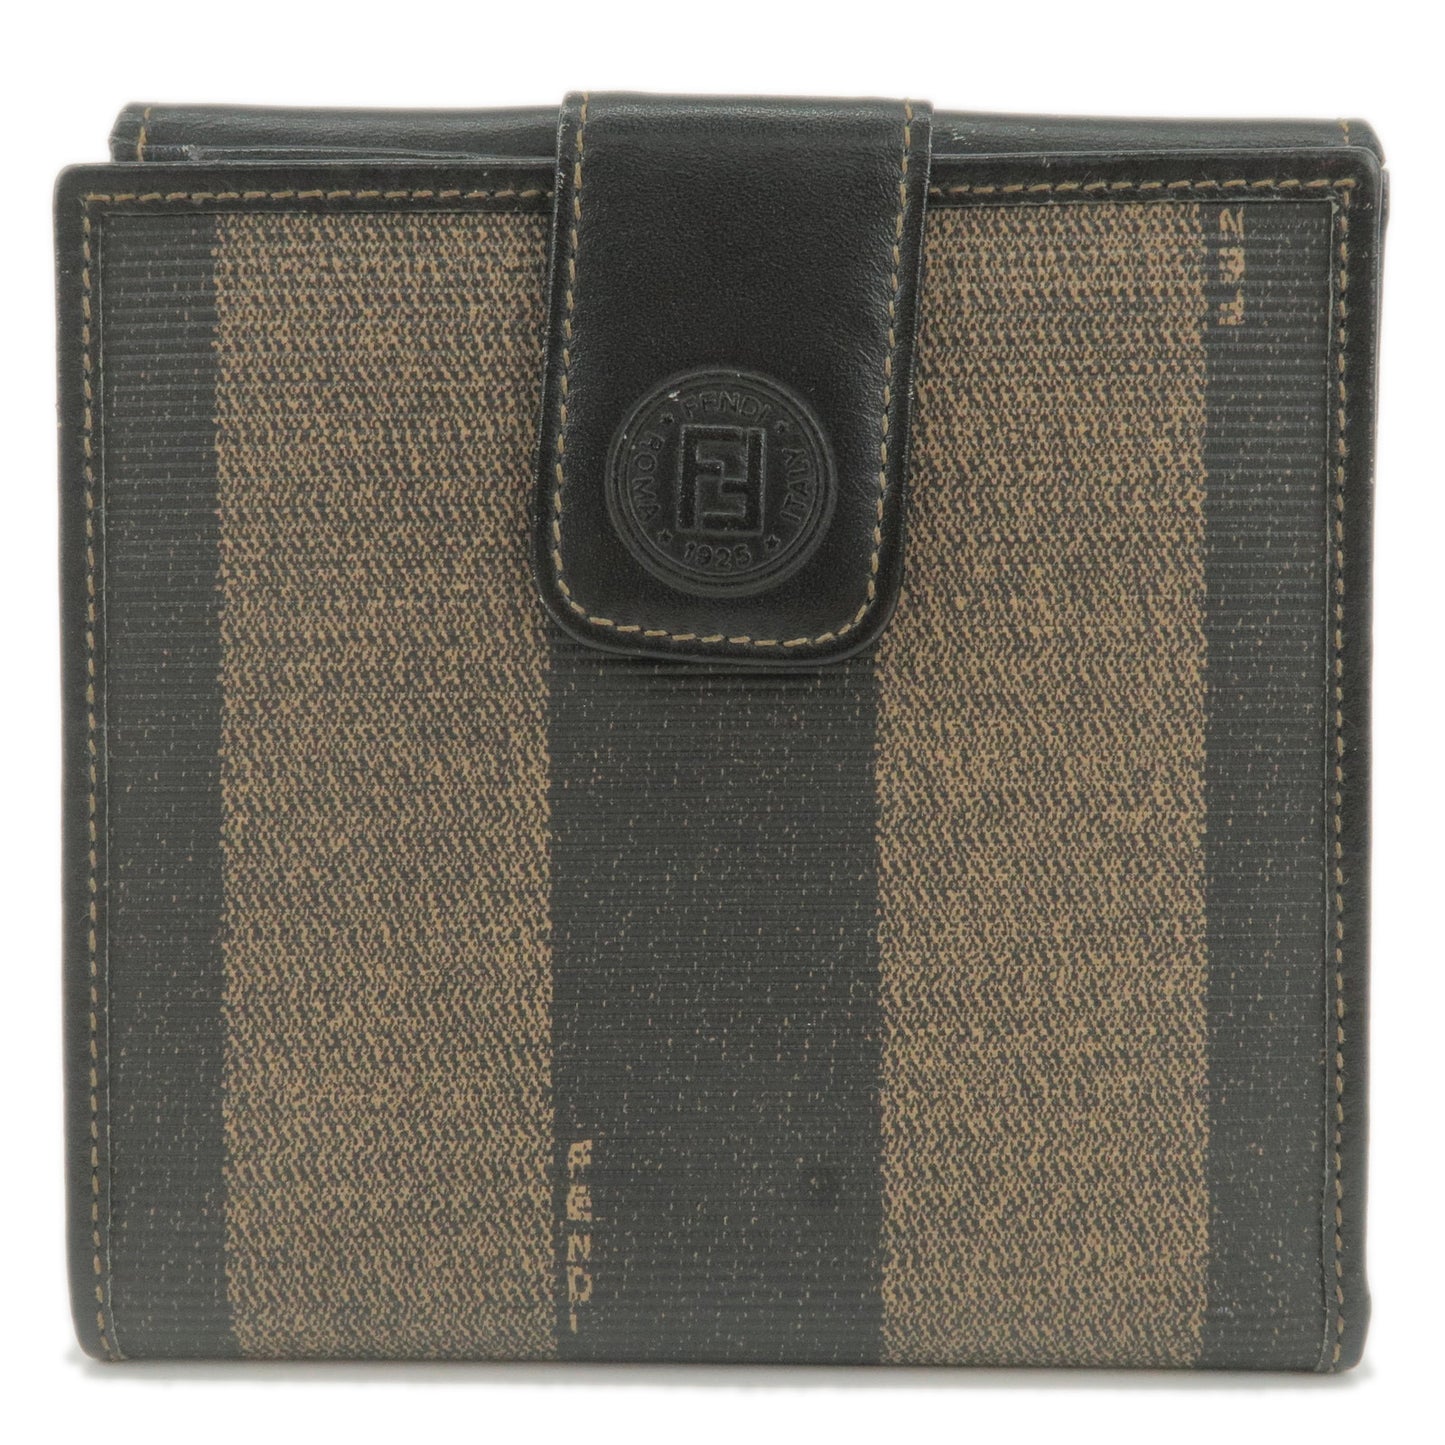 FENDI-Pequin-PVC-Leather-Double-Snap-Wallet-Khaki-Black-01695